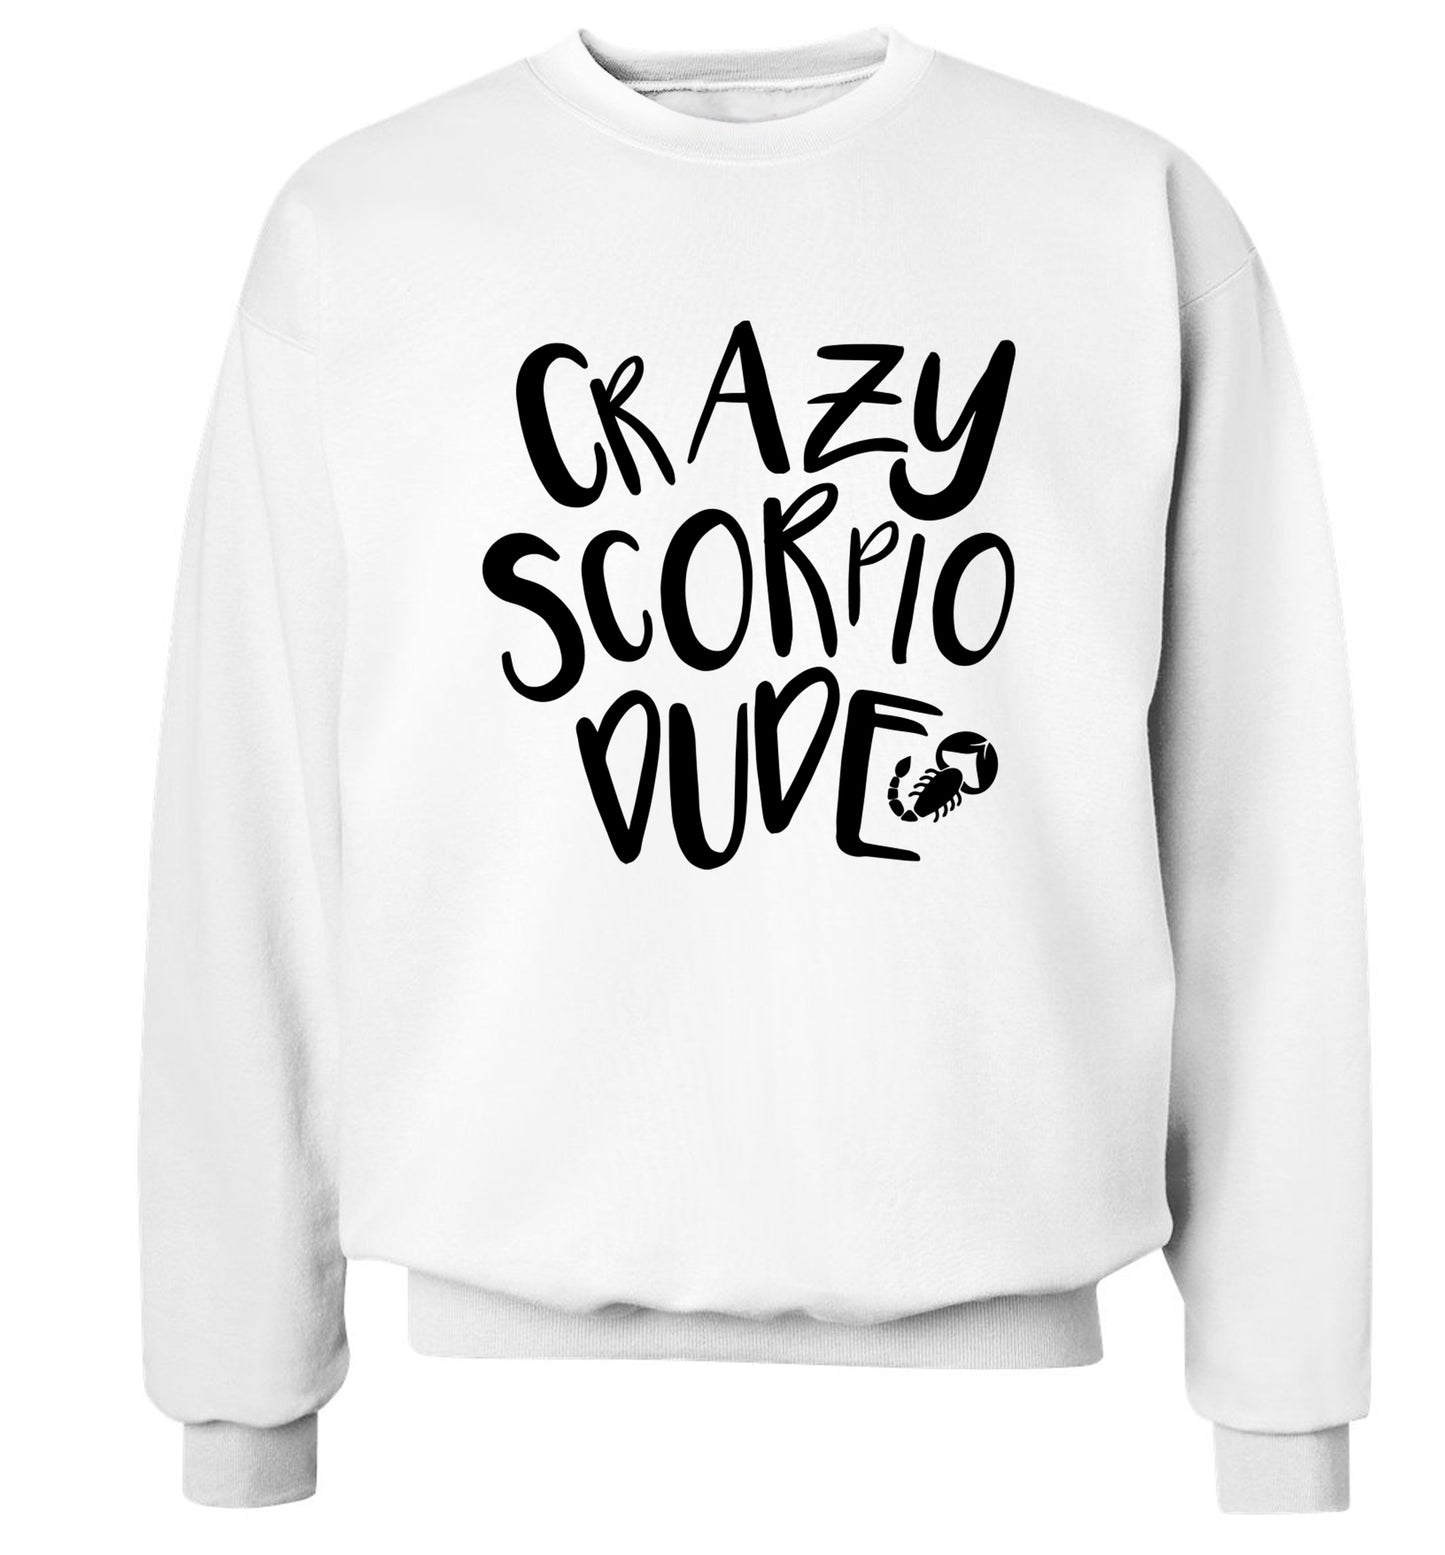 Crazy scorpio dude Adult's unisex white Sweater 2XL